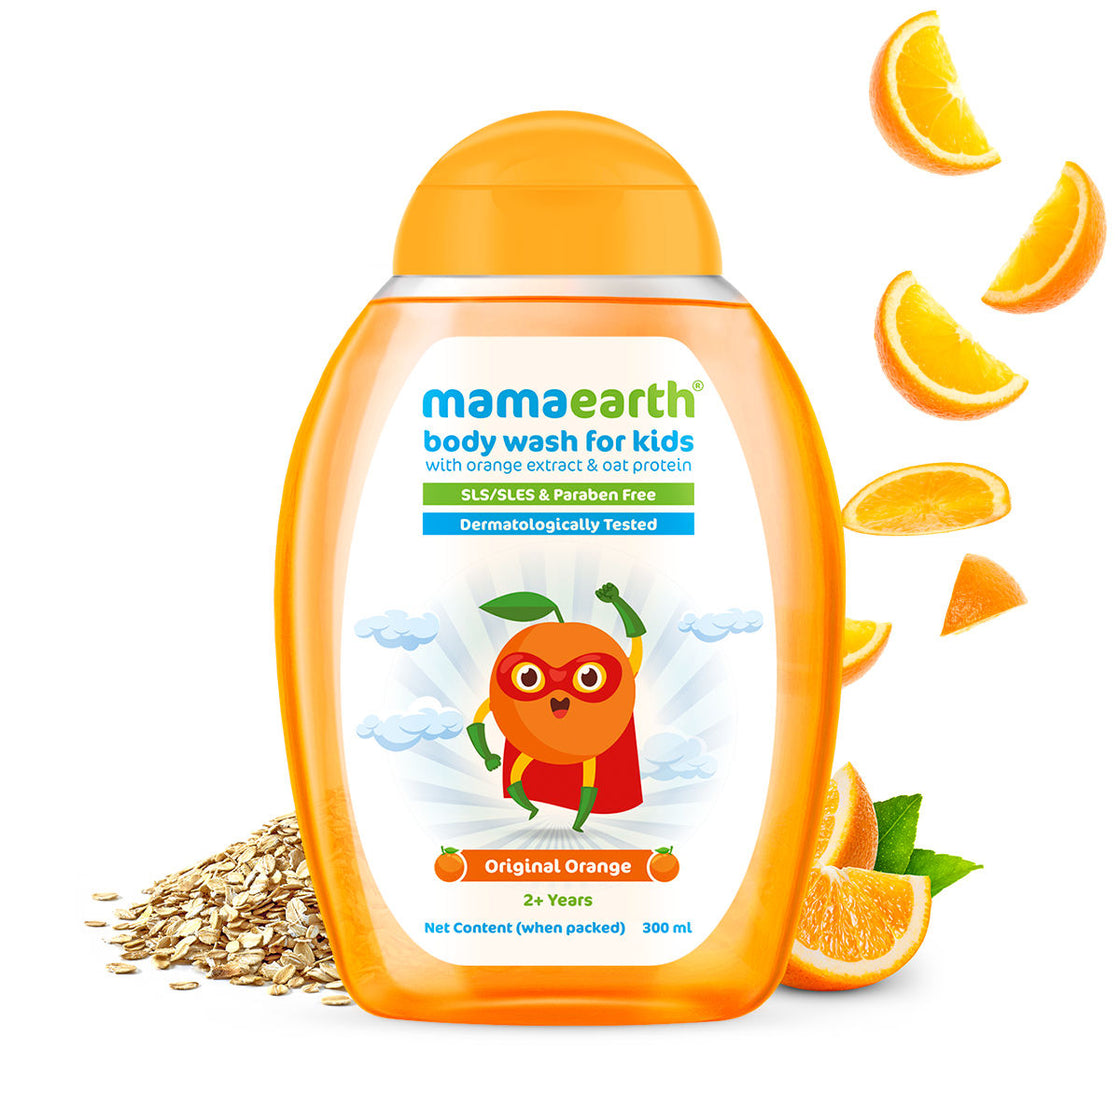 Mamaearth Original Orange Body Wash For Kids With Orange & Oat Protein